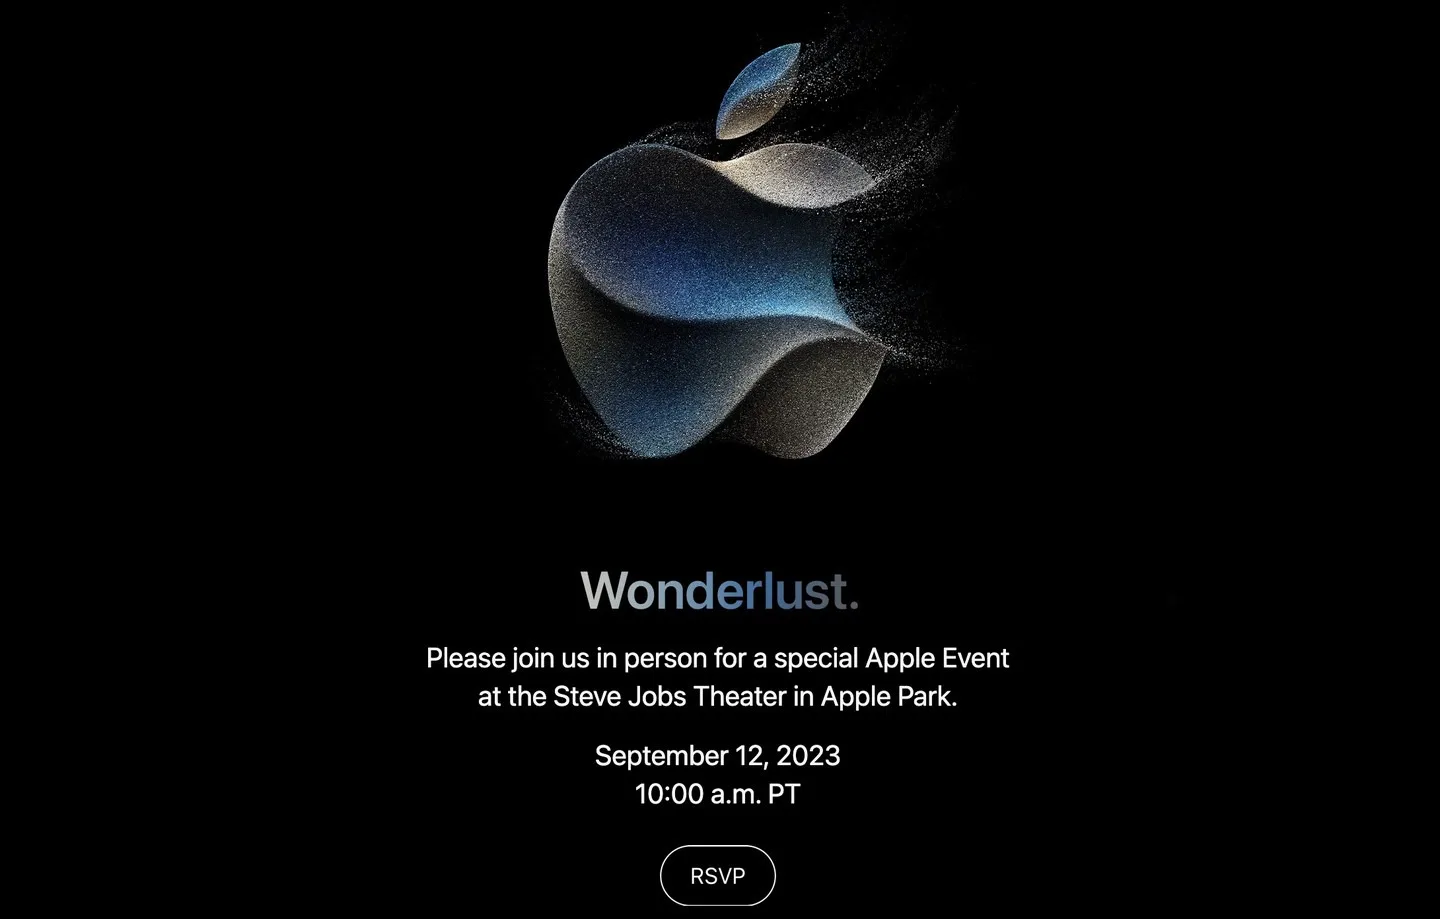 apple wonderlust event jpg